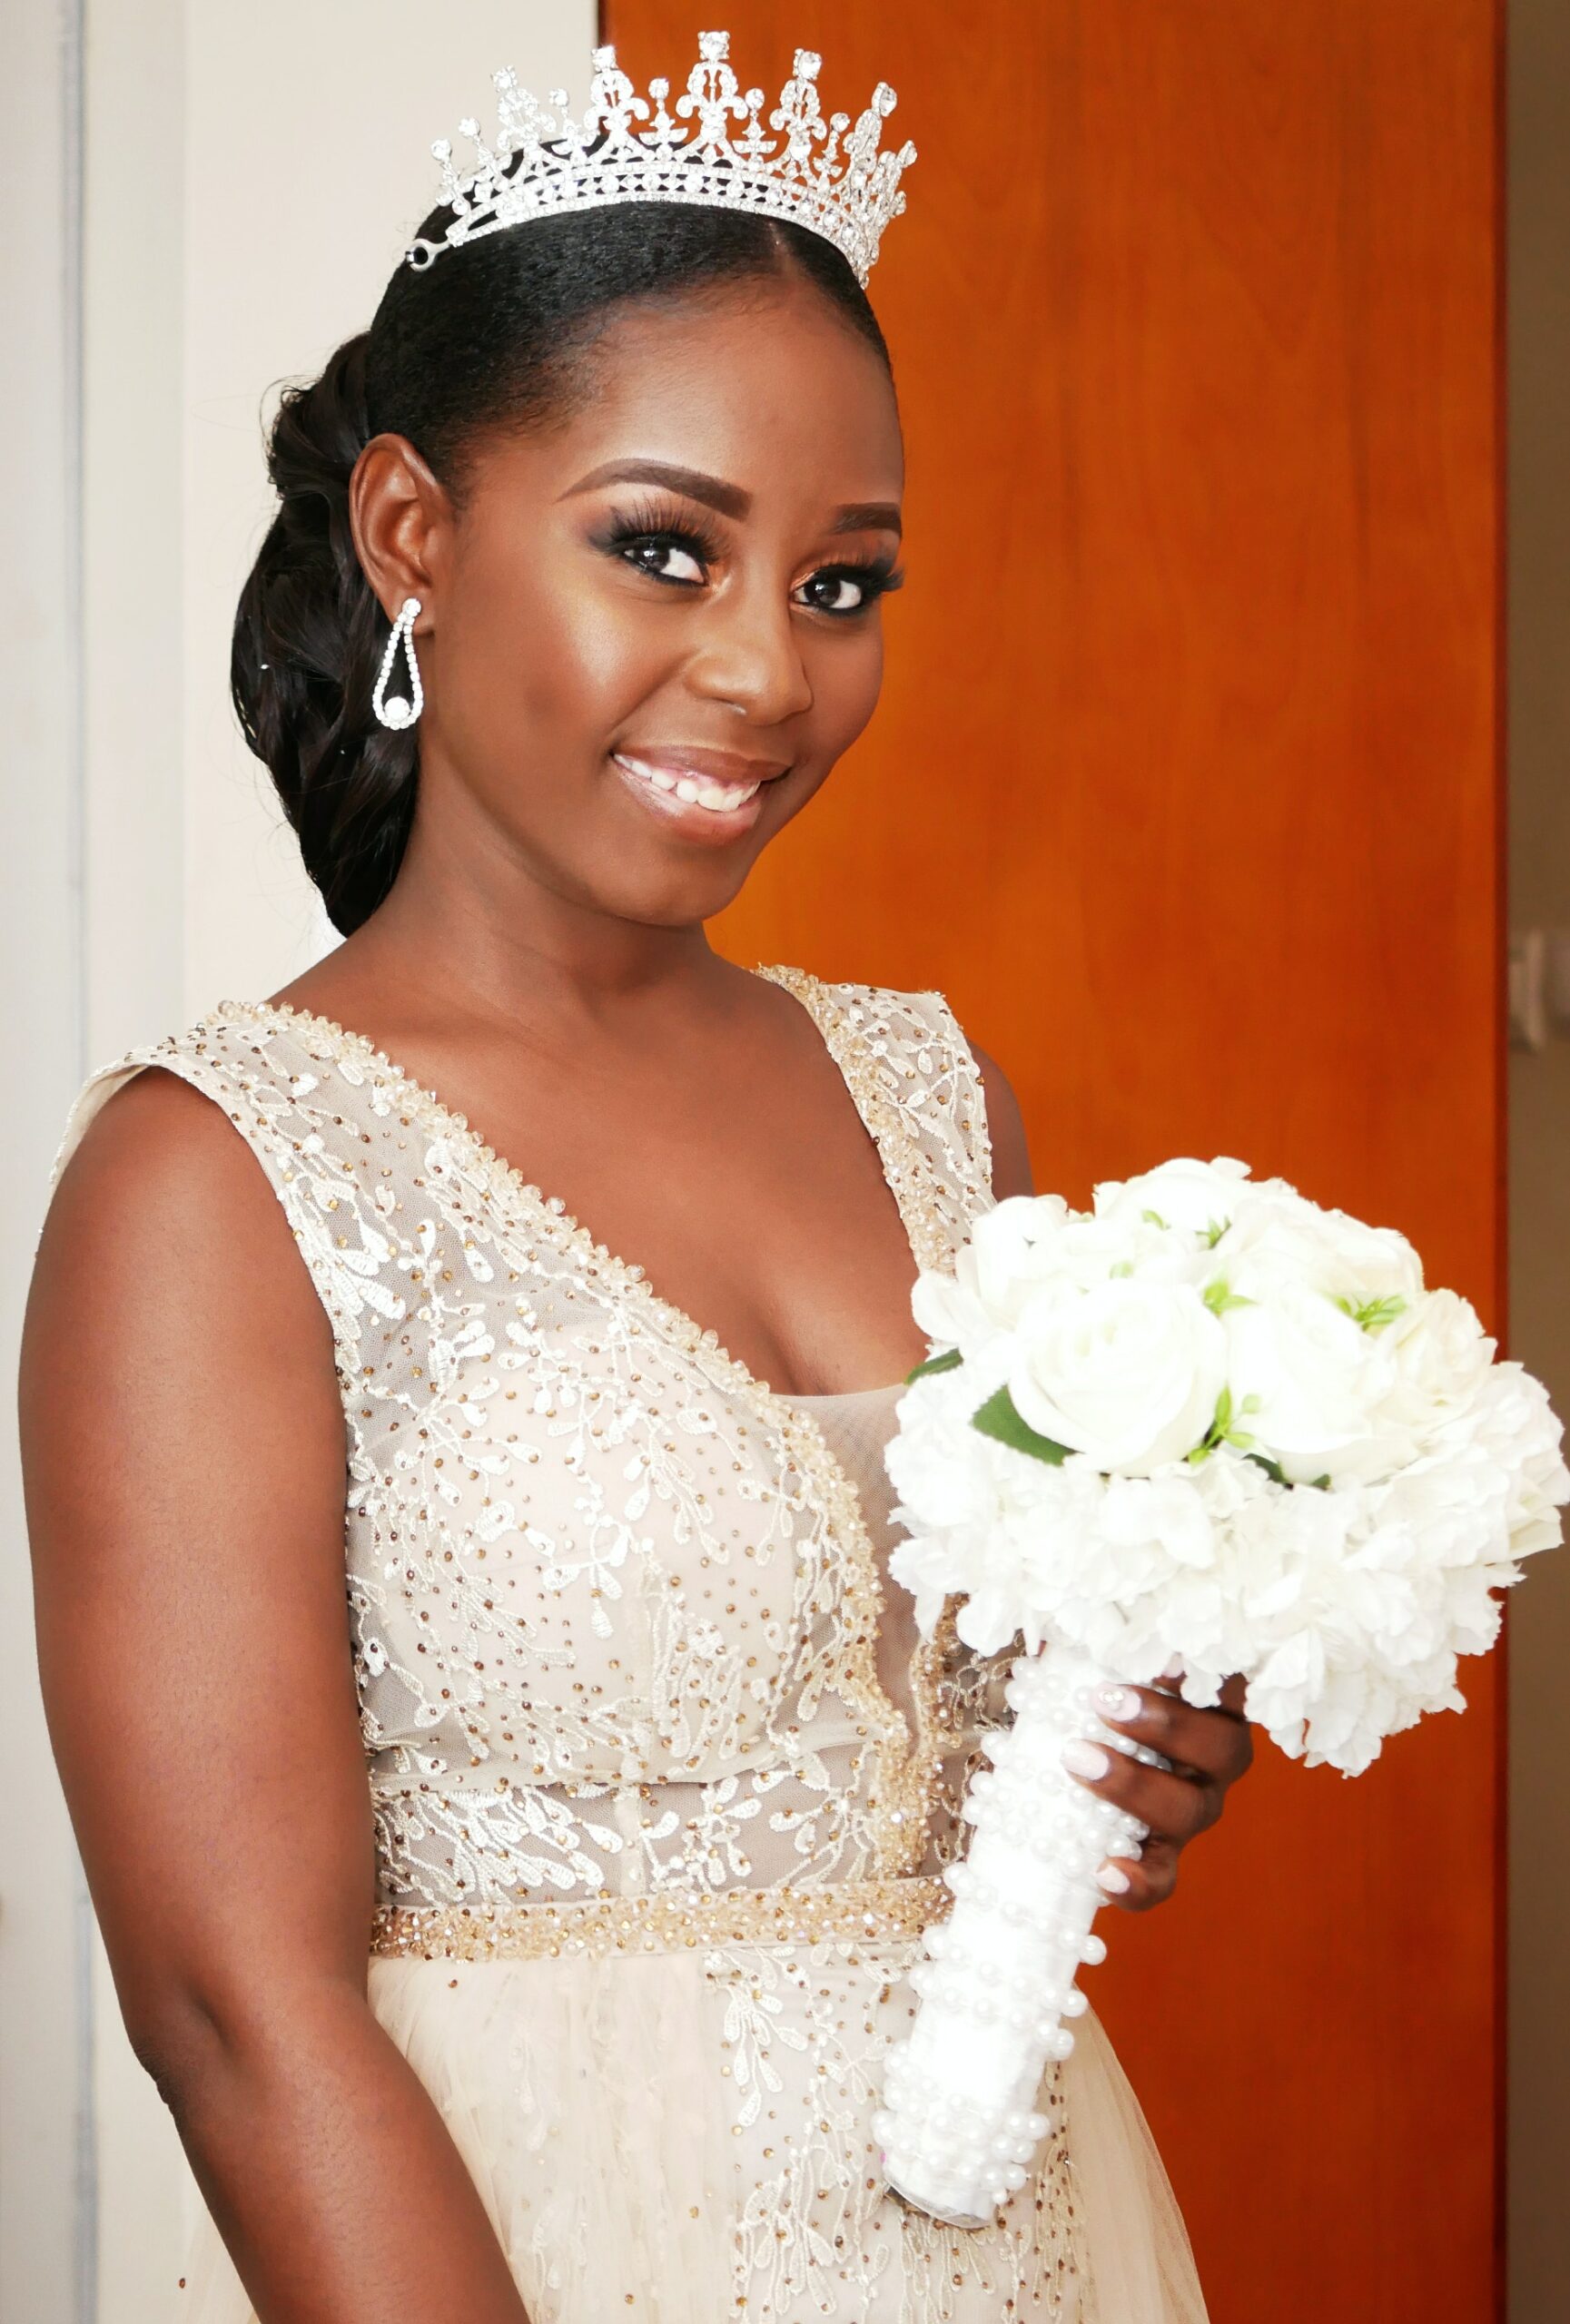 10 black women's bridal hairstyles | Black Hair - Afroculture.net